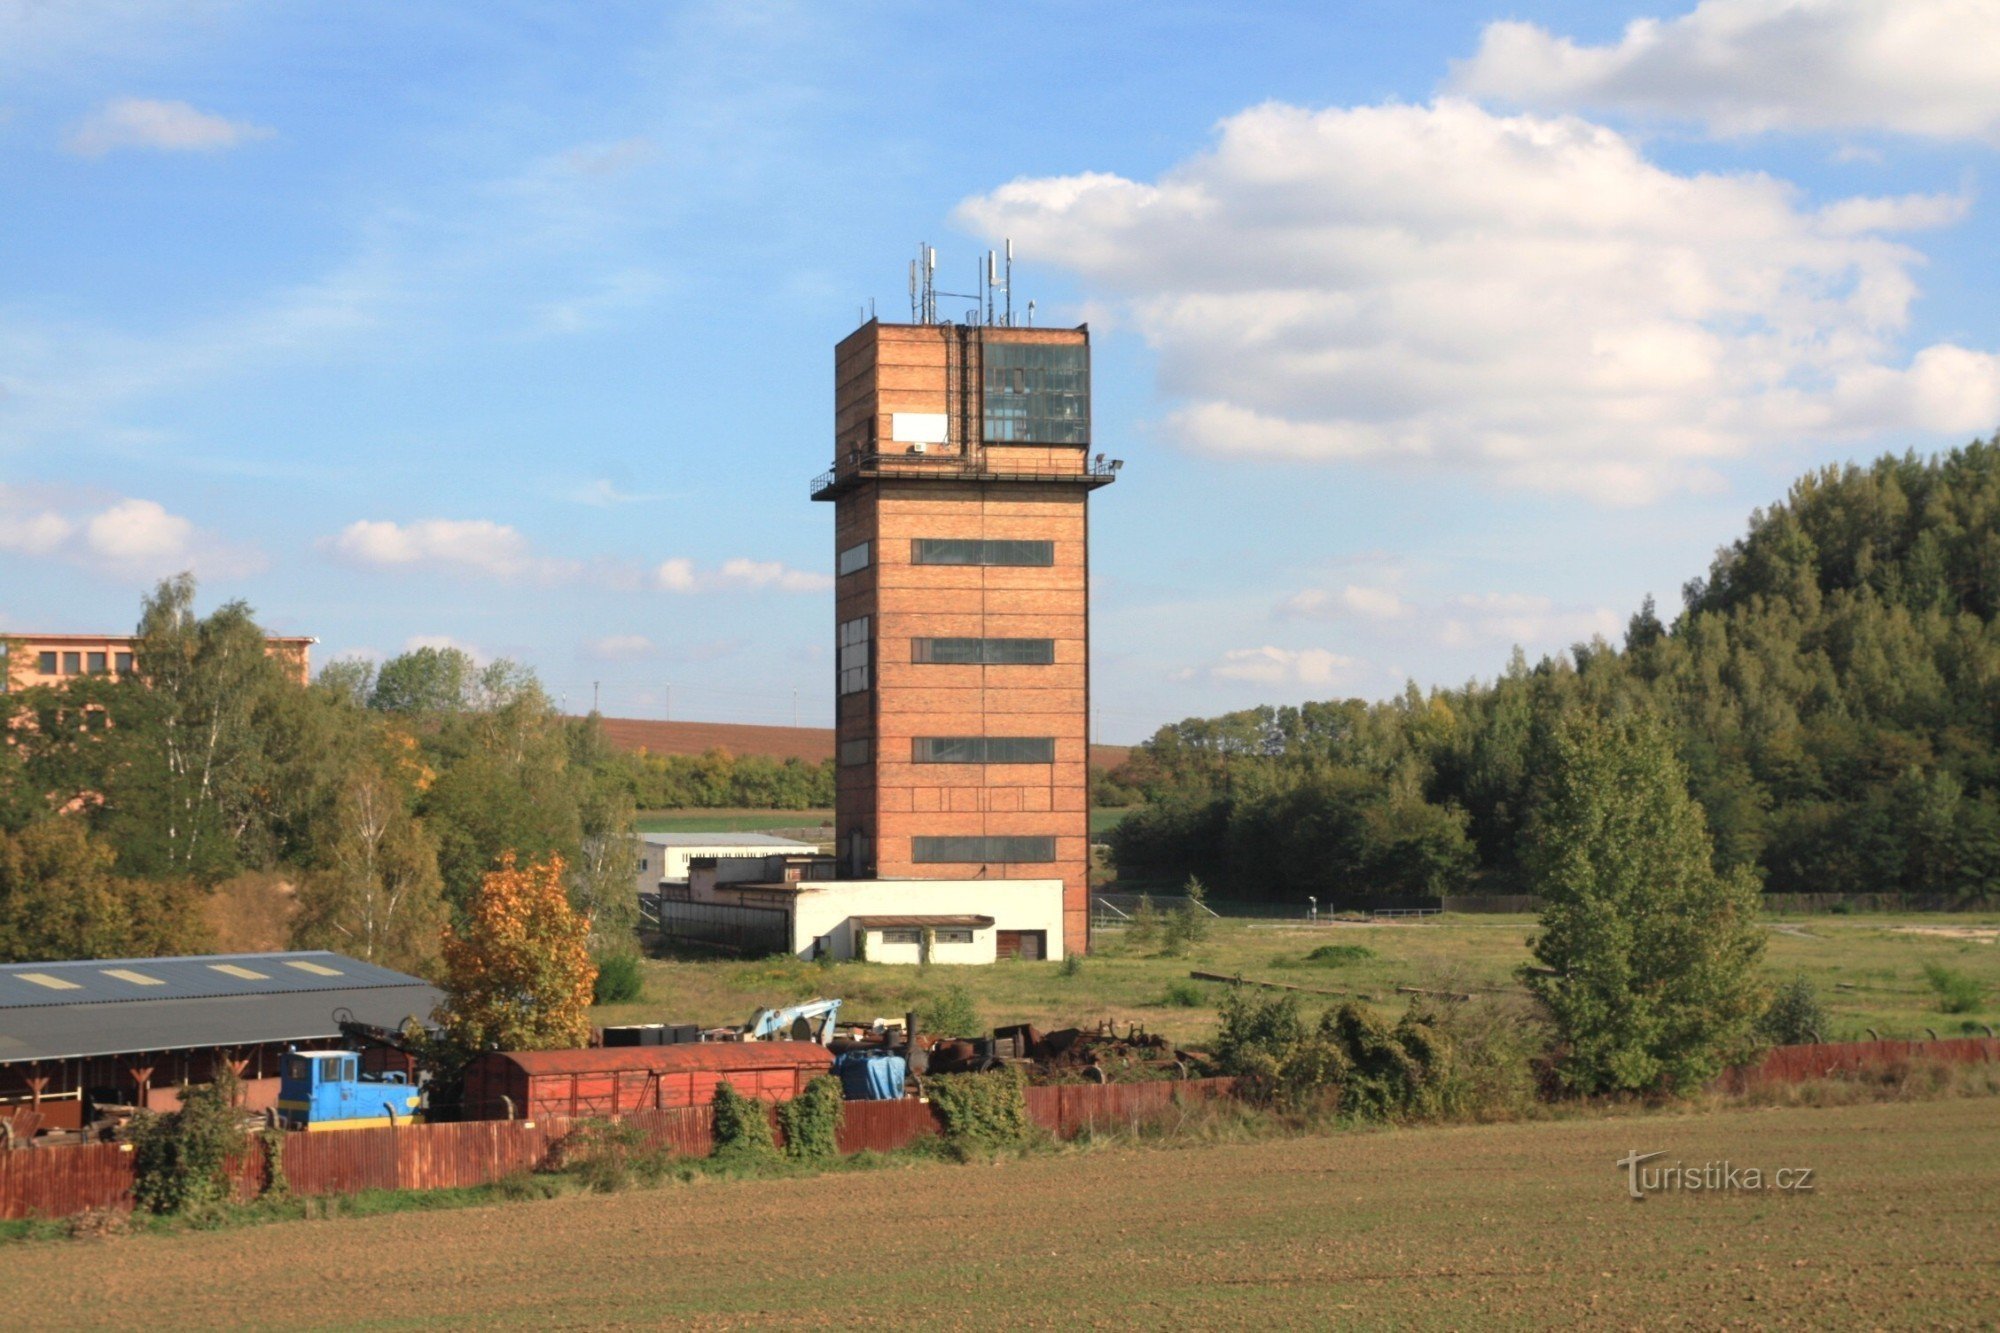 Jindřich-minens minetårn